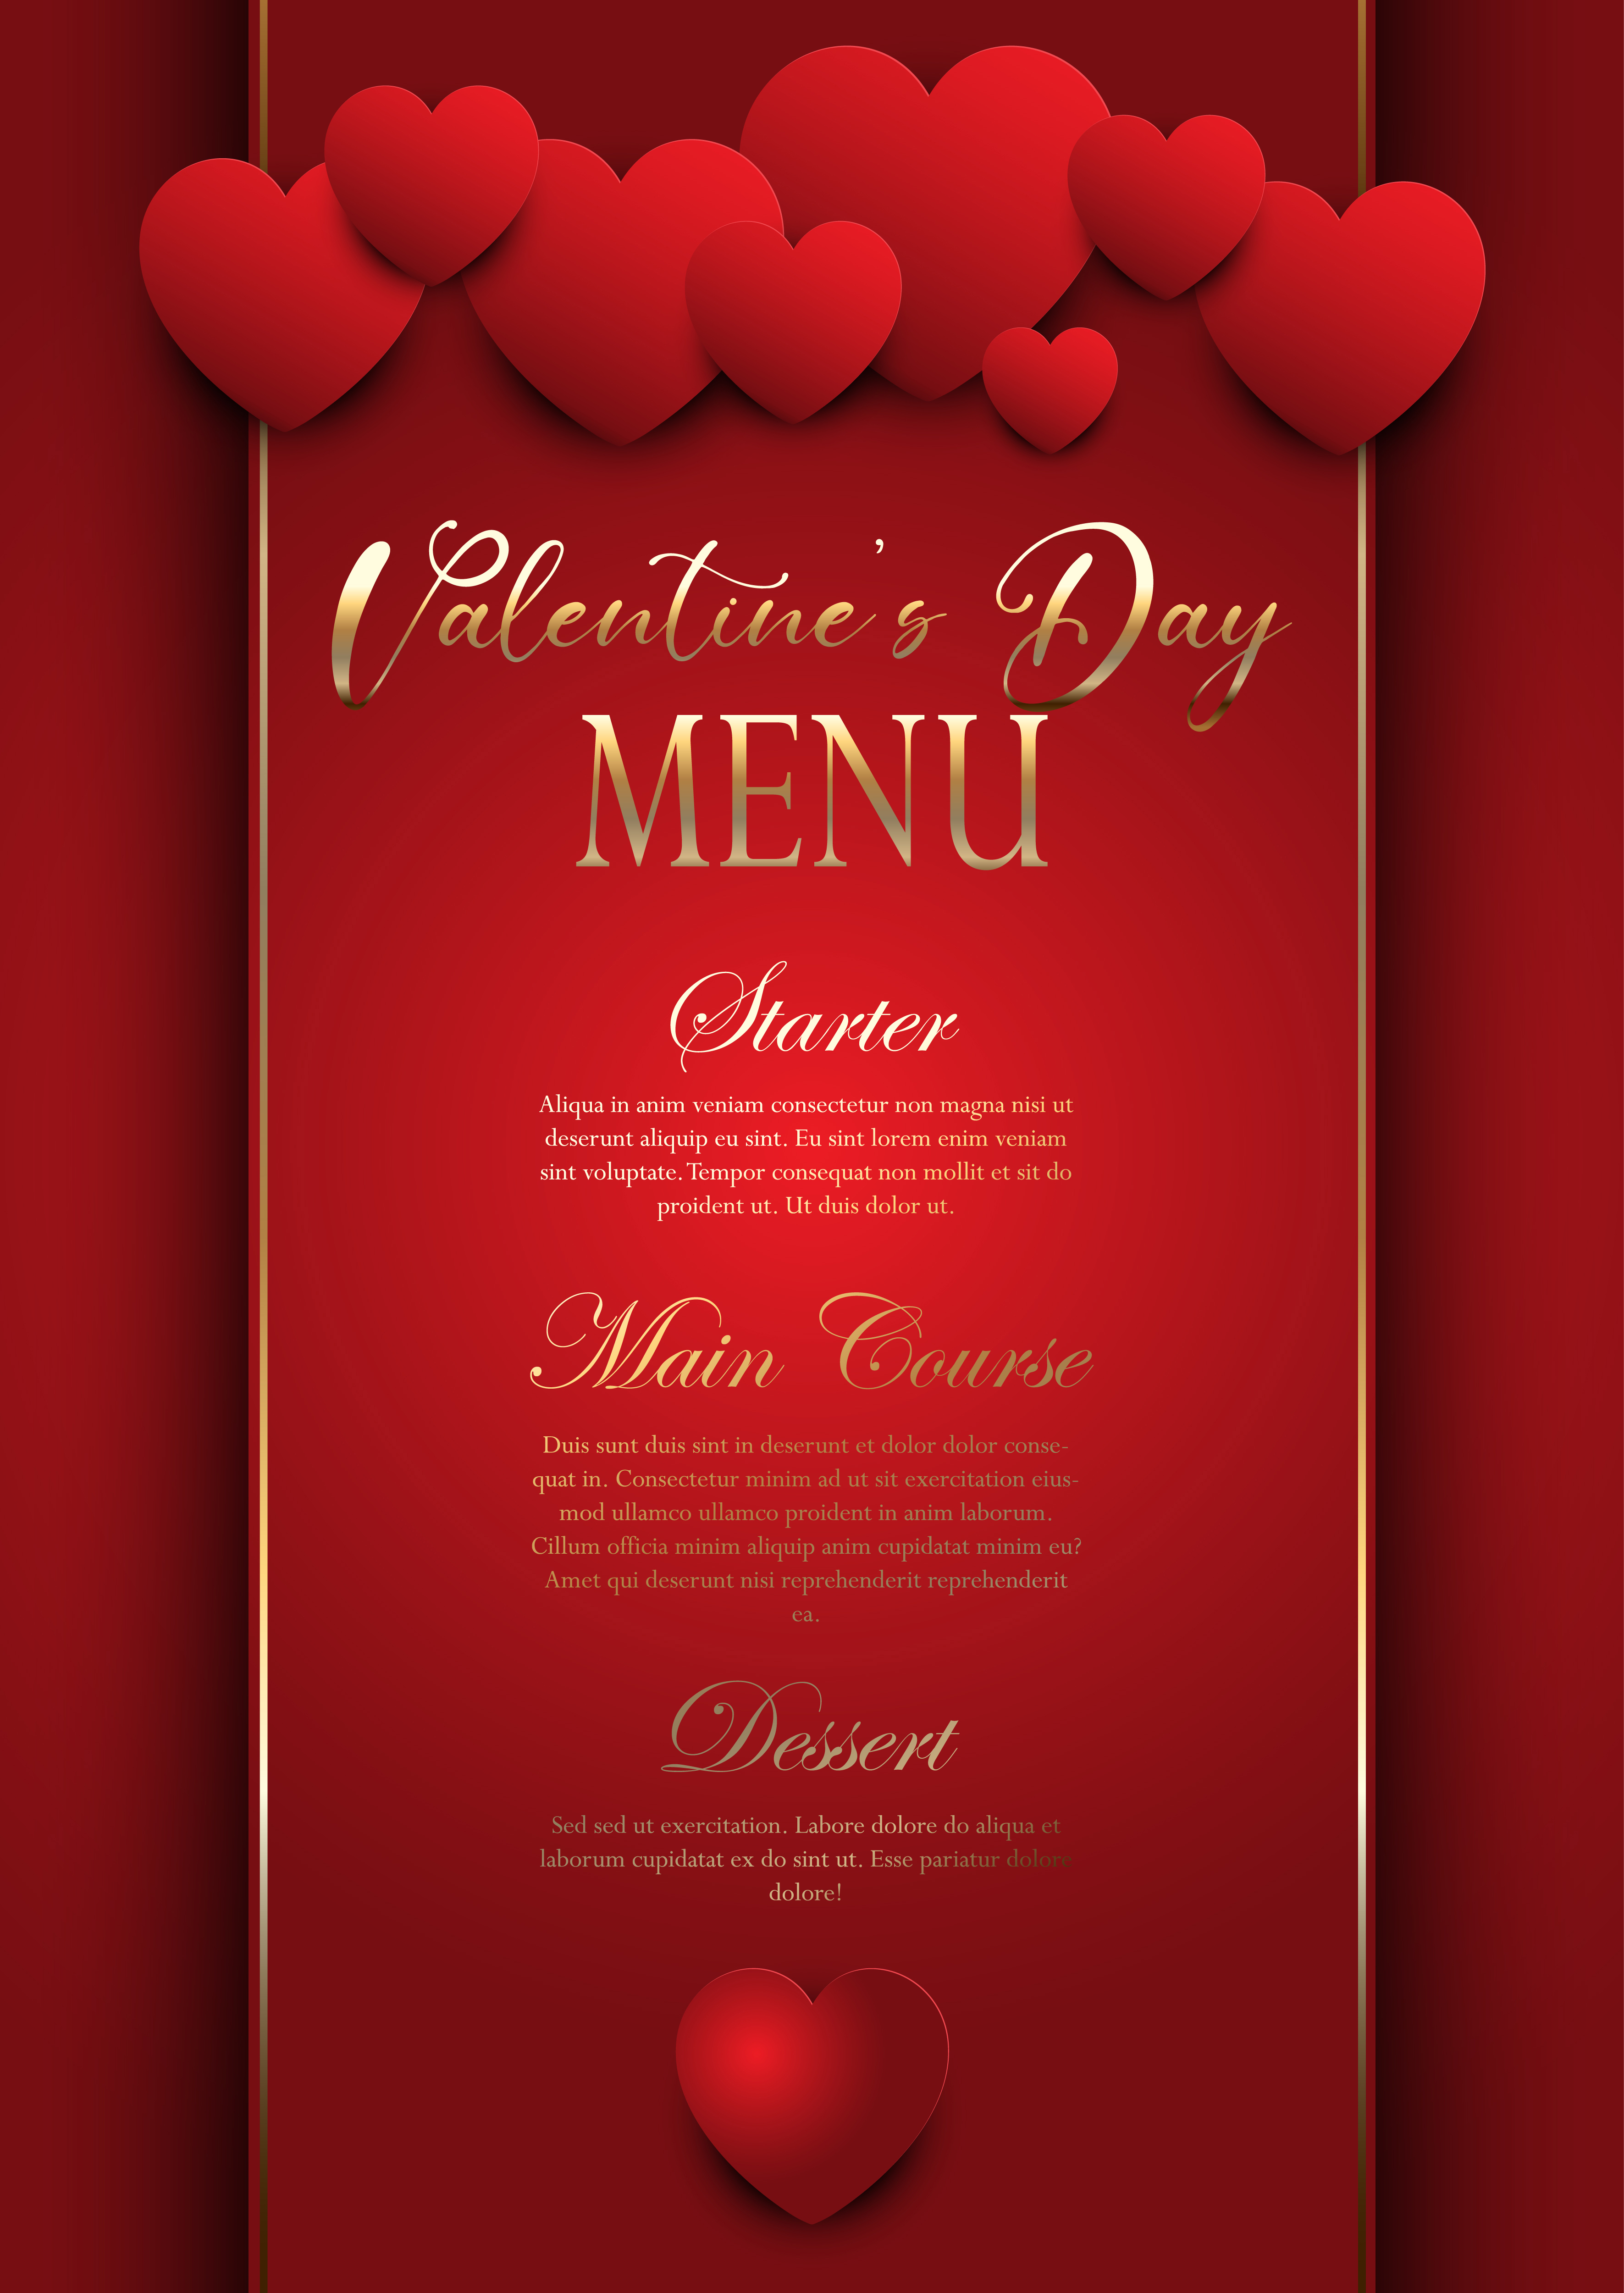 Valentines Day elegant menu design 693295 - Download Free Vectors